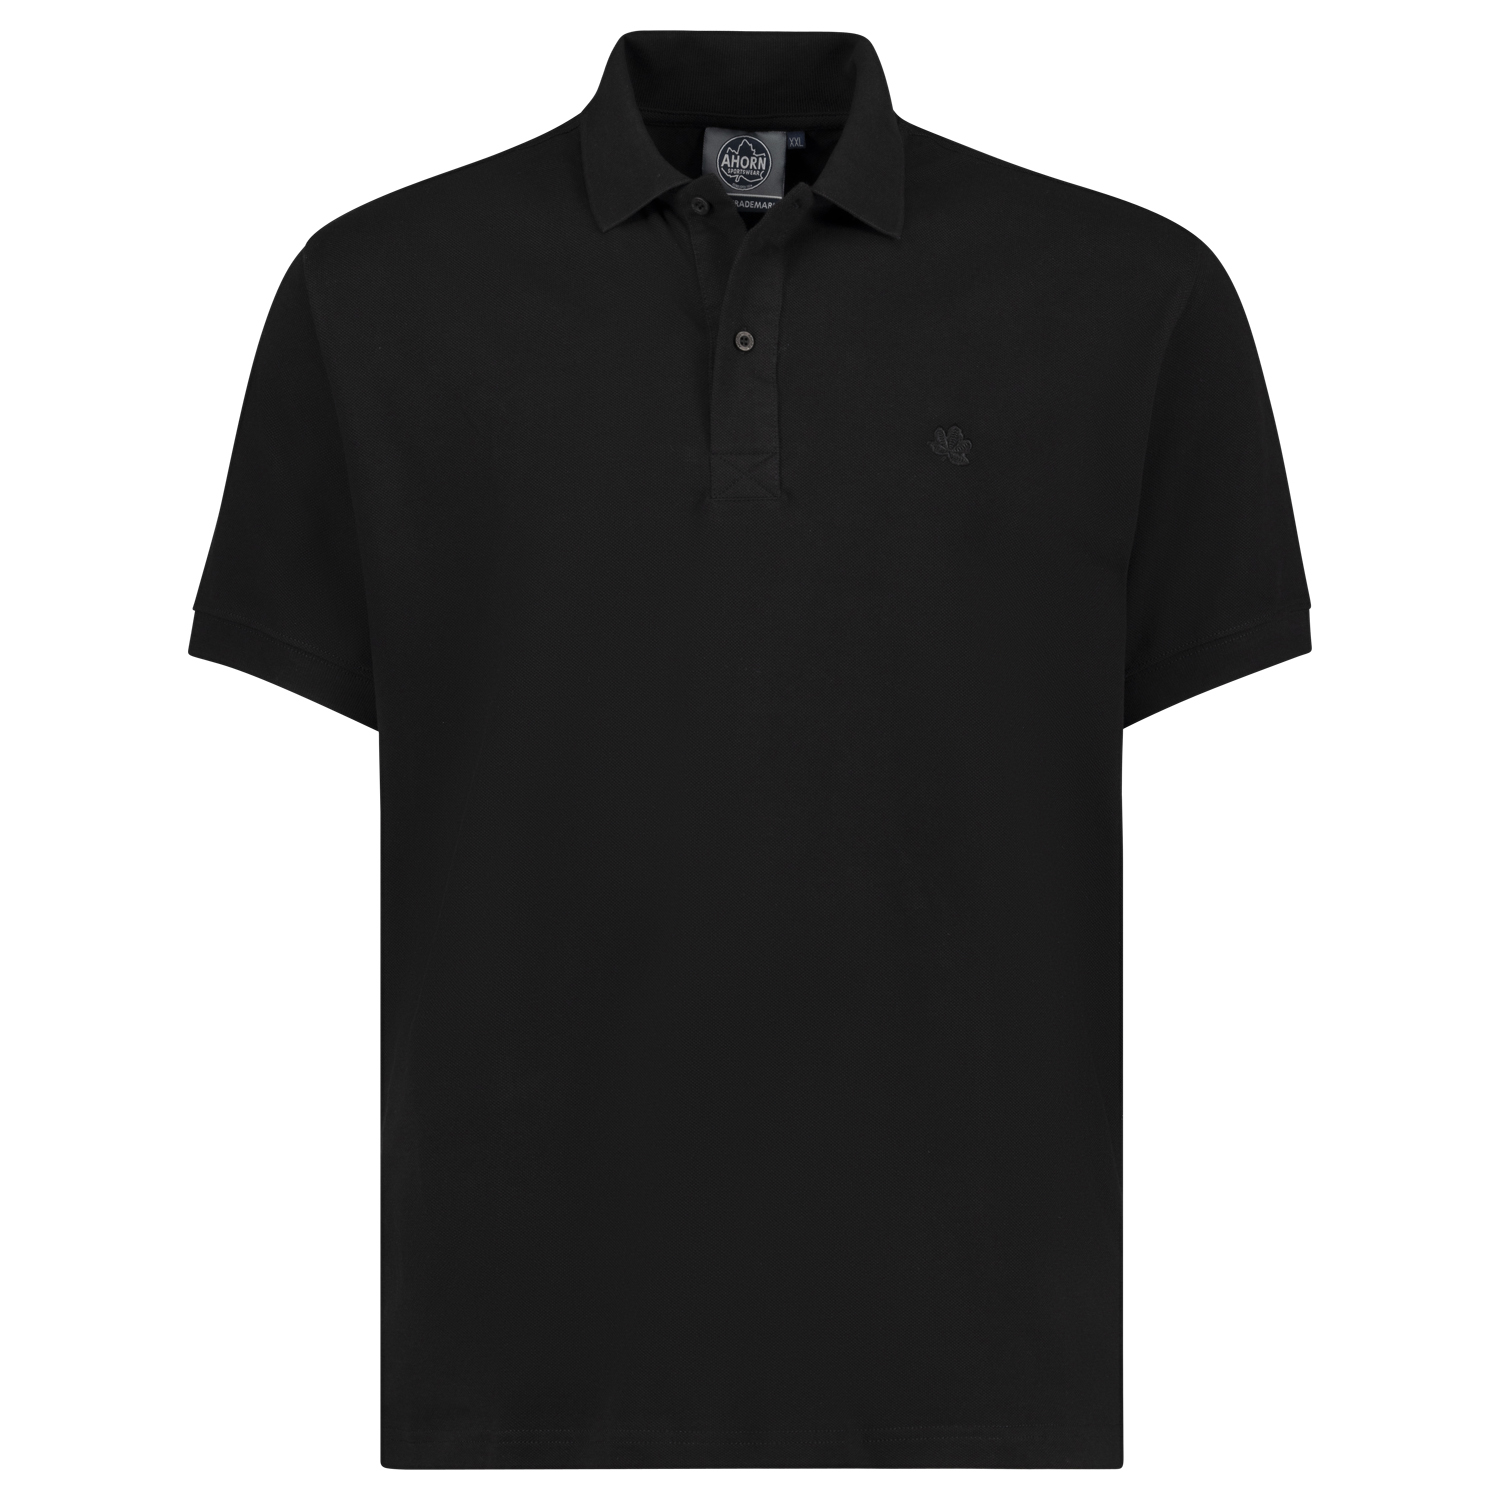 Polo-shirt en noir à manches courtes by Ahorn Sportswear en grandes tailles 2XL - 10XL